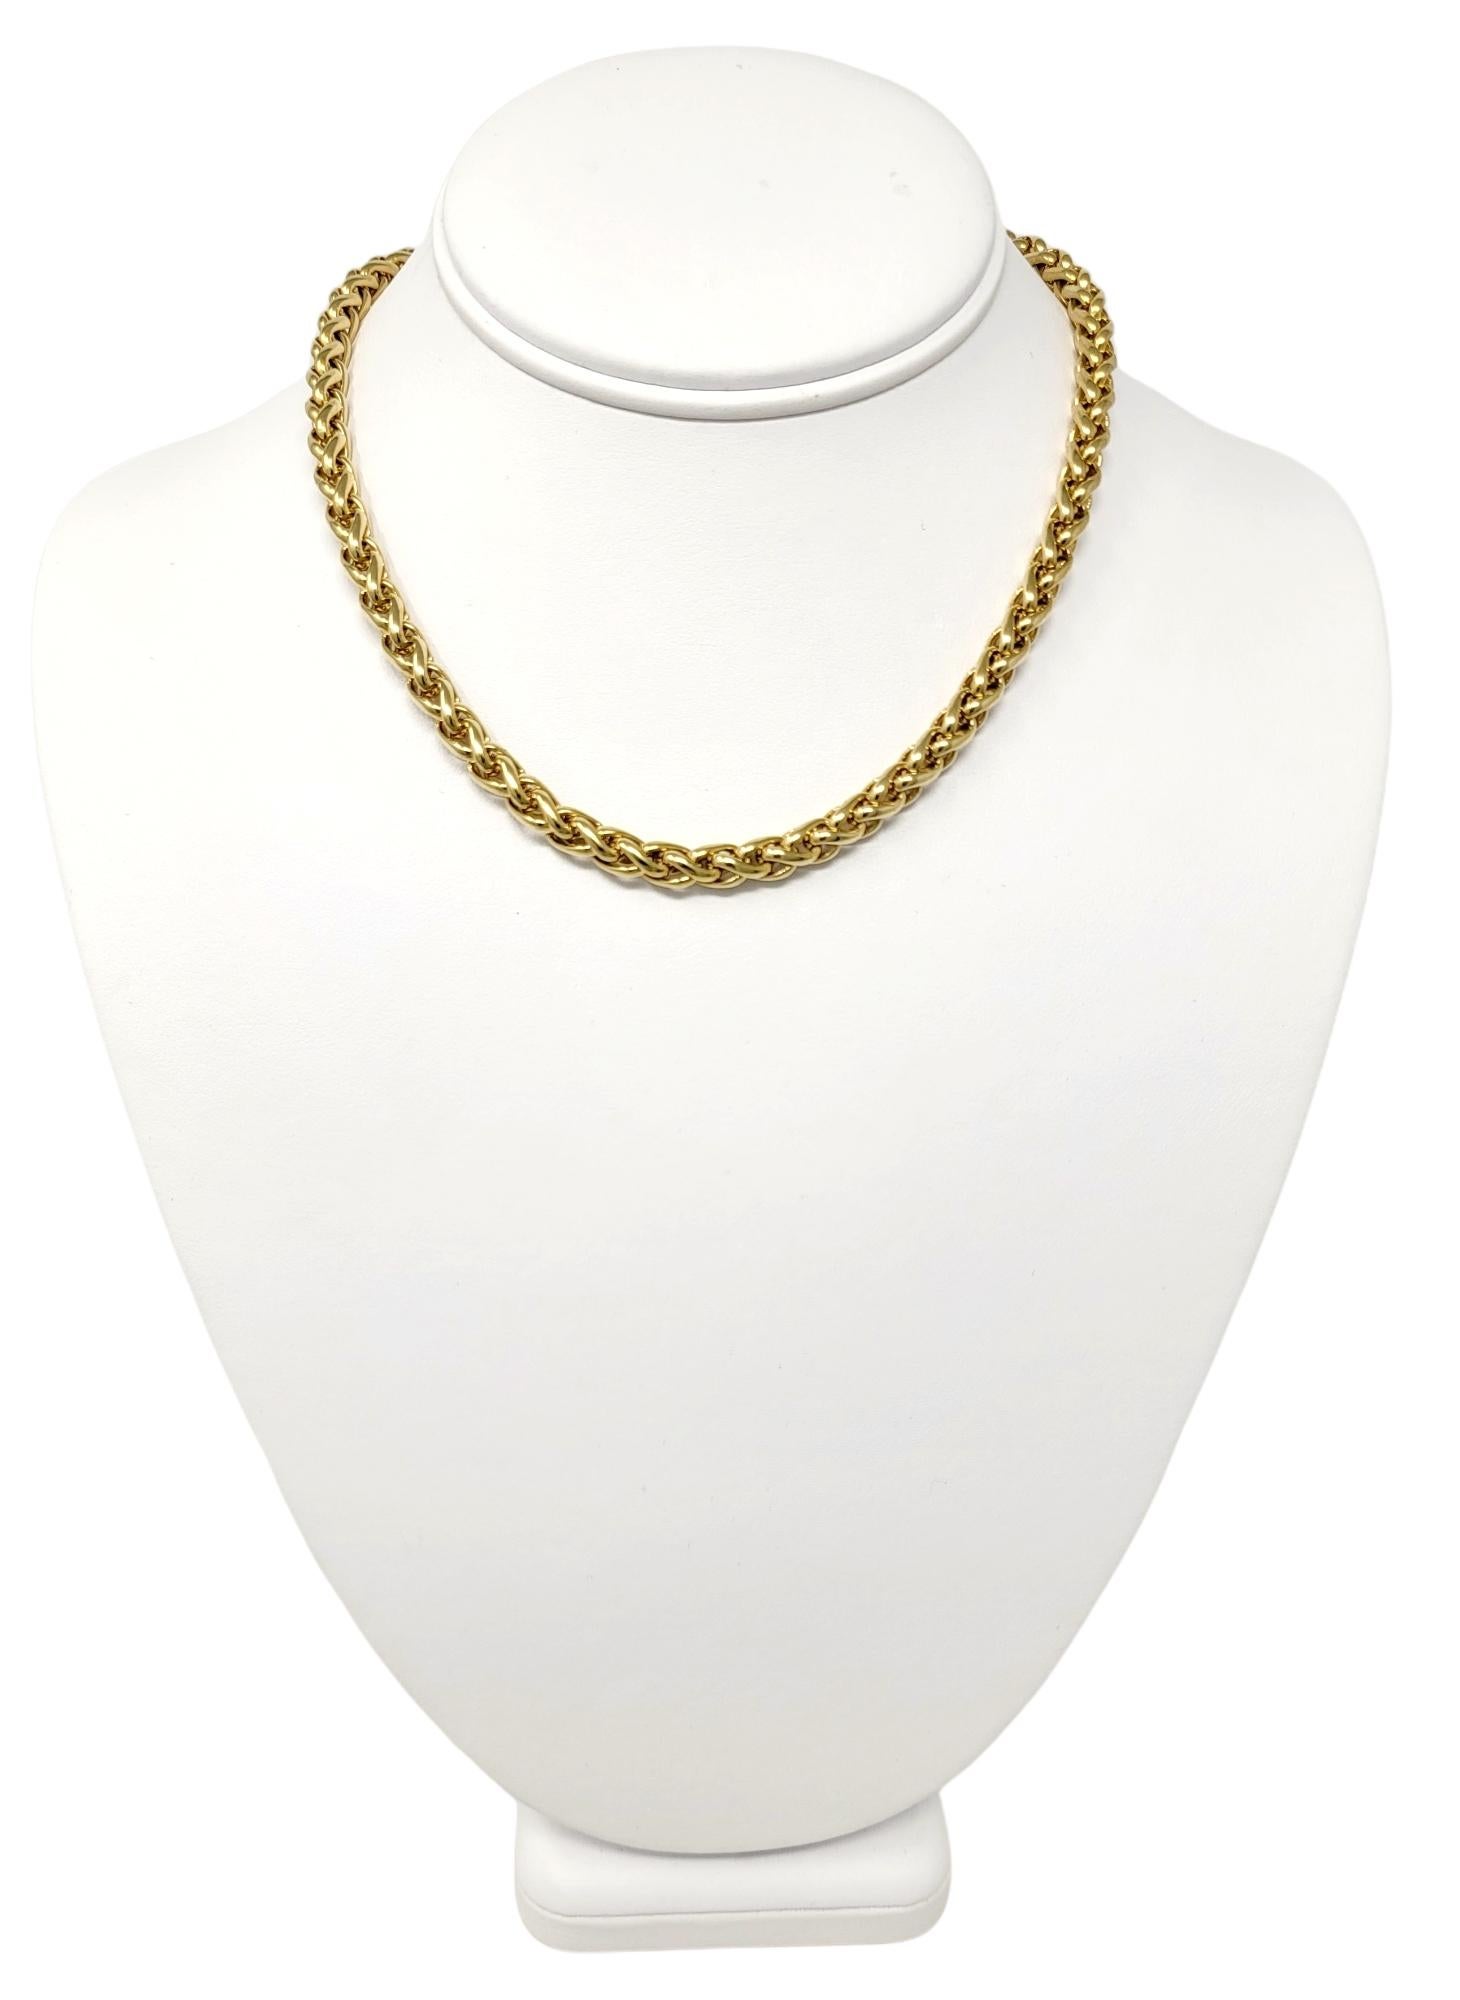 David Yurman 18 Karat Yellow Gold Wheat Chain Link Necklace with Diamond Accents 4